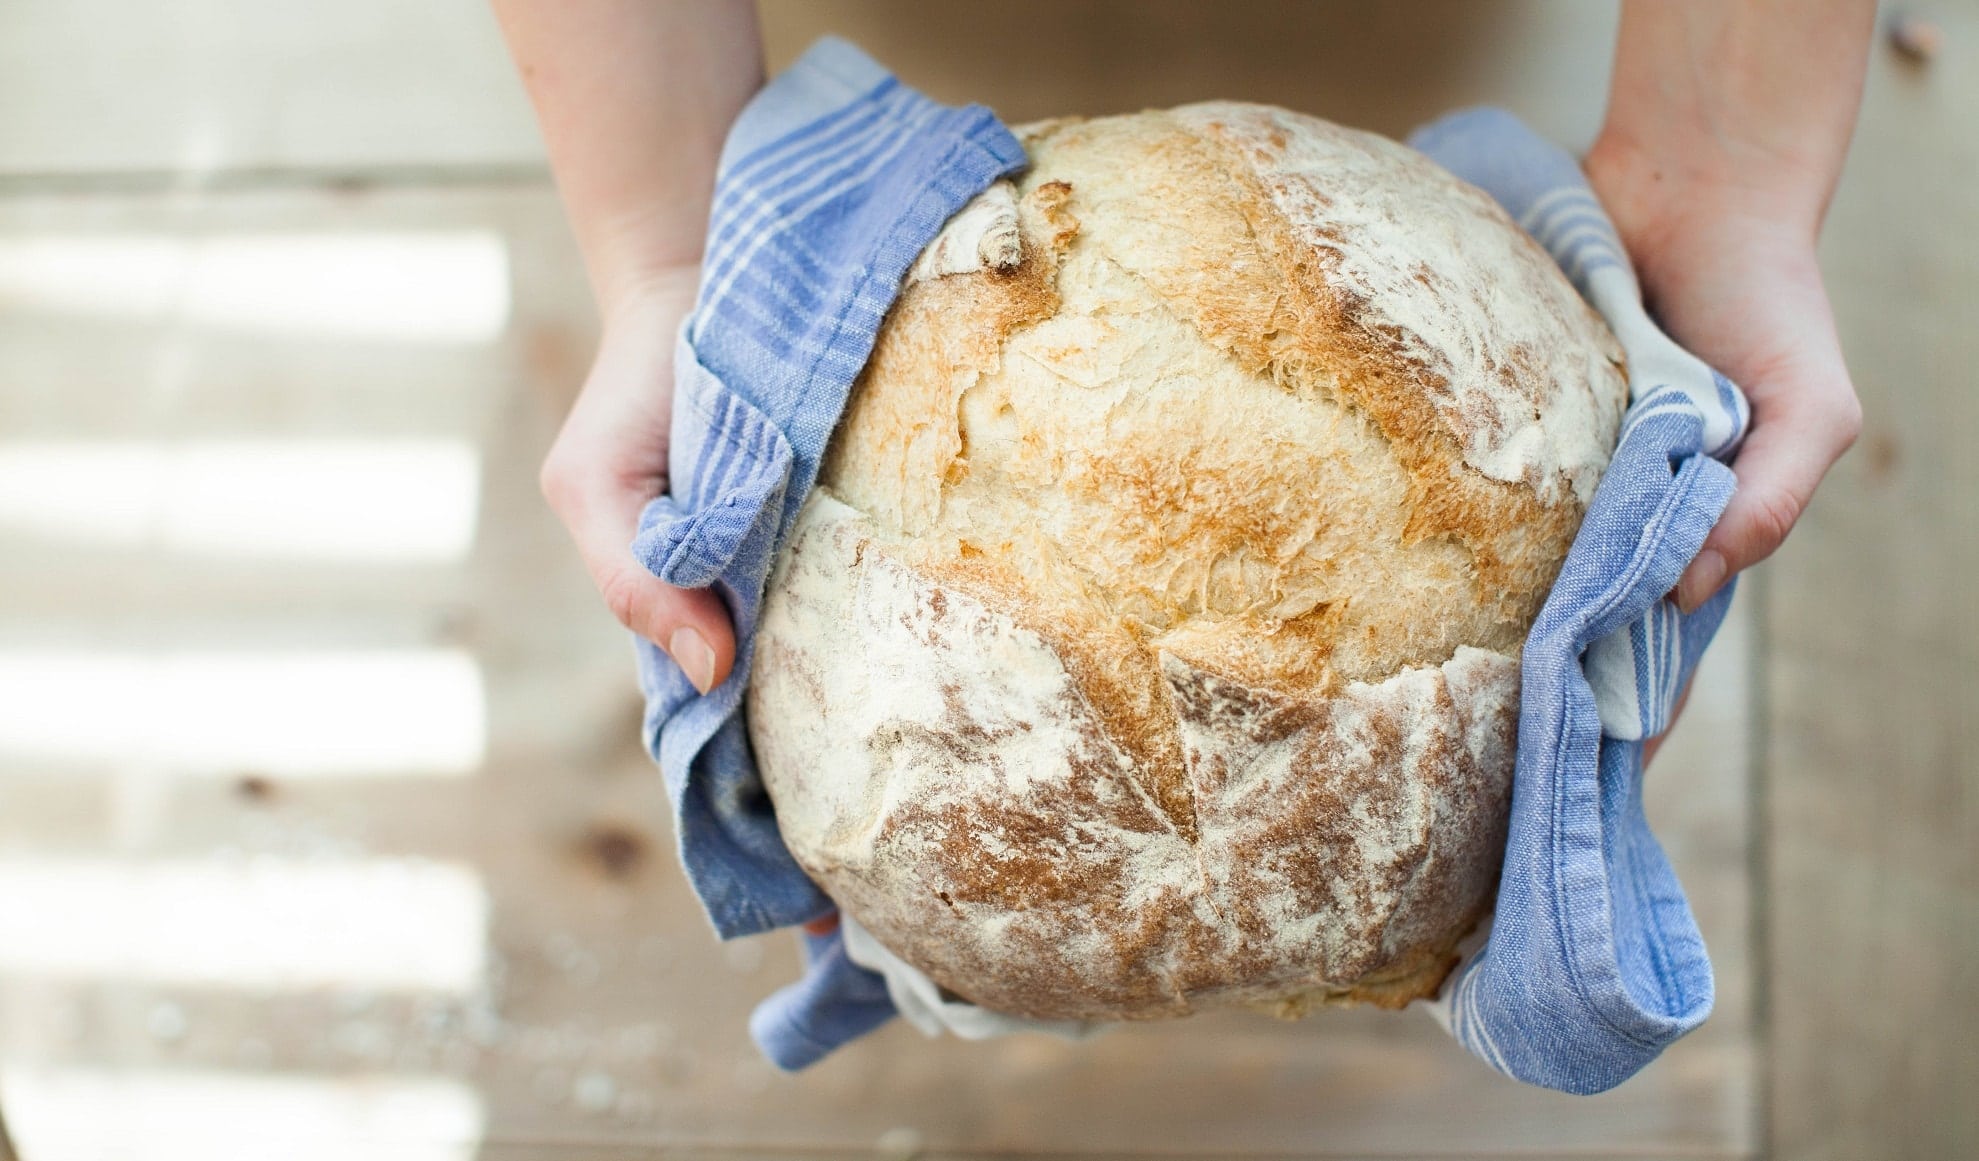 https://joannefedler.com/wp-content/uploads/2018/08/A-Loaf-of-Bread-by-Joanne-Fedler.jpg